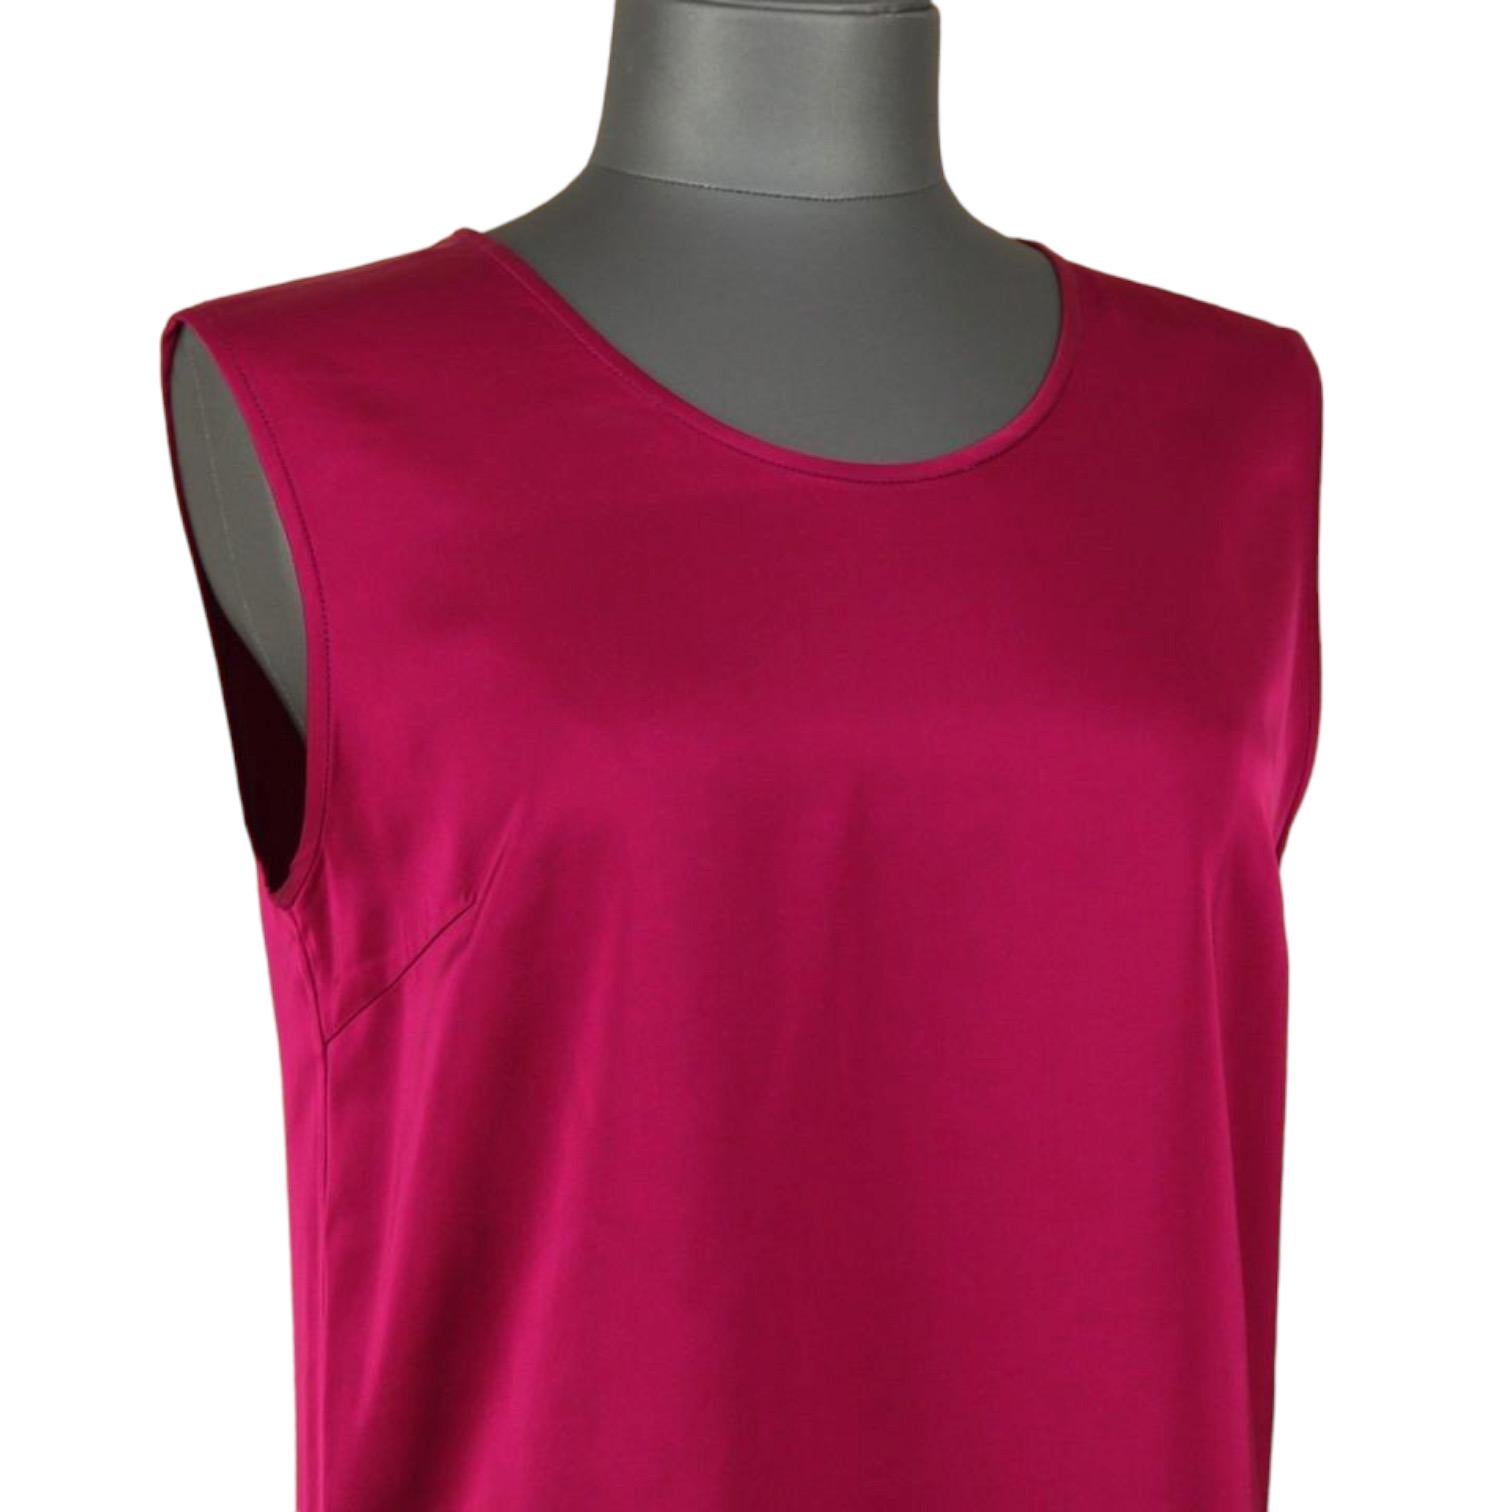 STELLA MCCARTNEY Sleeveless Tunic Blouse Shirt Top Red Viscose Scoop Neck Sz 38 For Sale 2